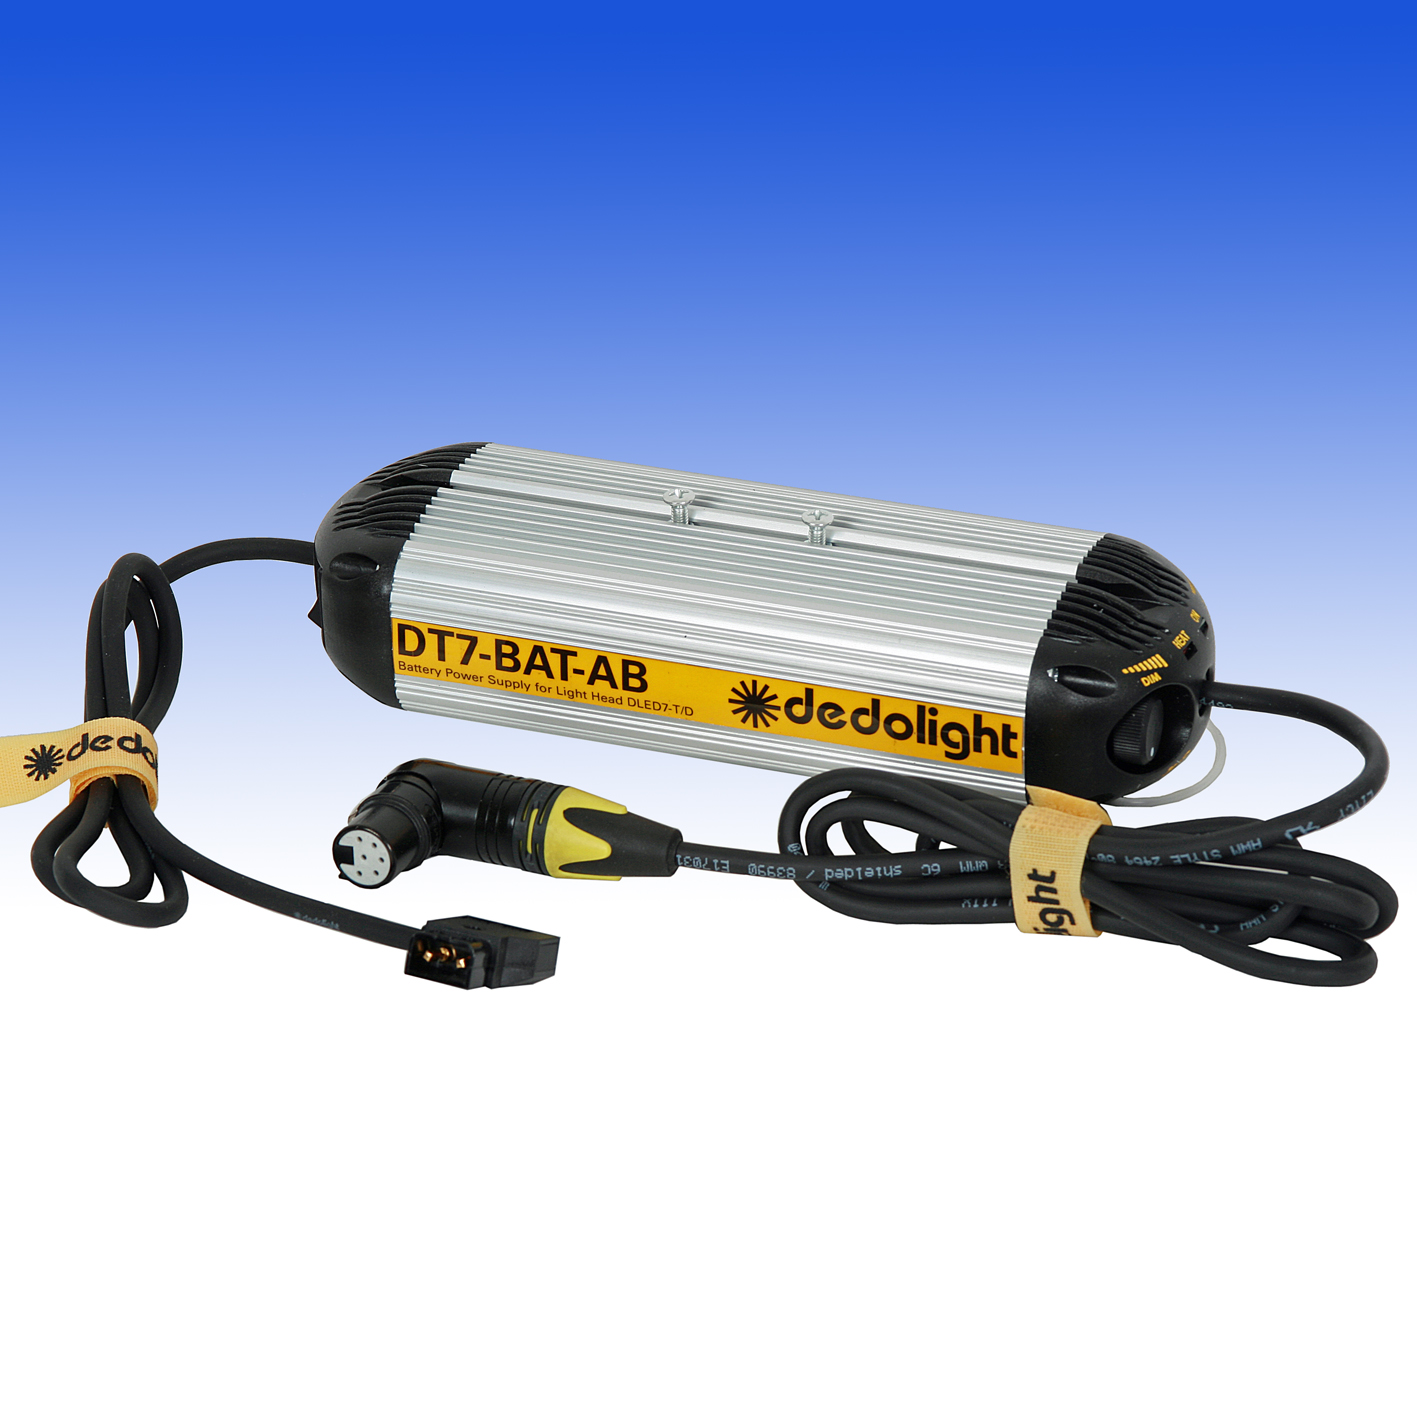 DT7-BAT-AB Batterie- Vorschaltgerät zur DLED7-D 